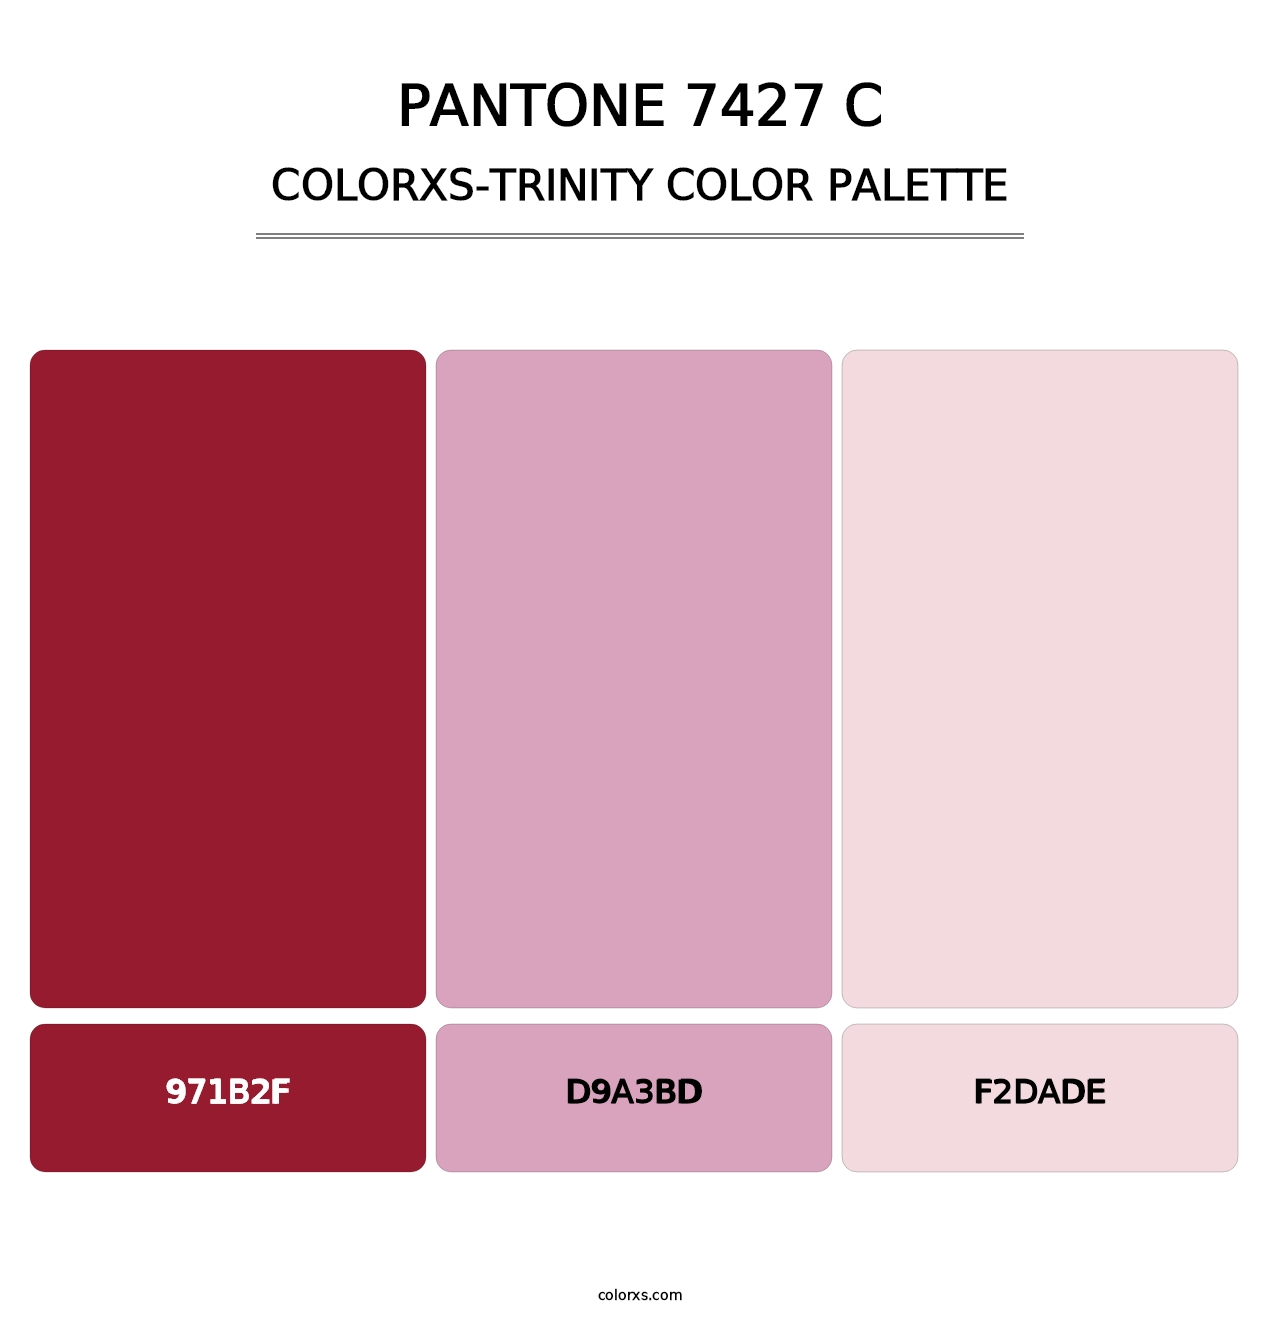 PANTONE 7427 C - Colorxs Trinity Palette